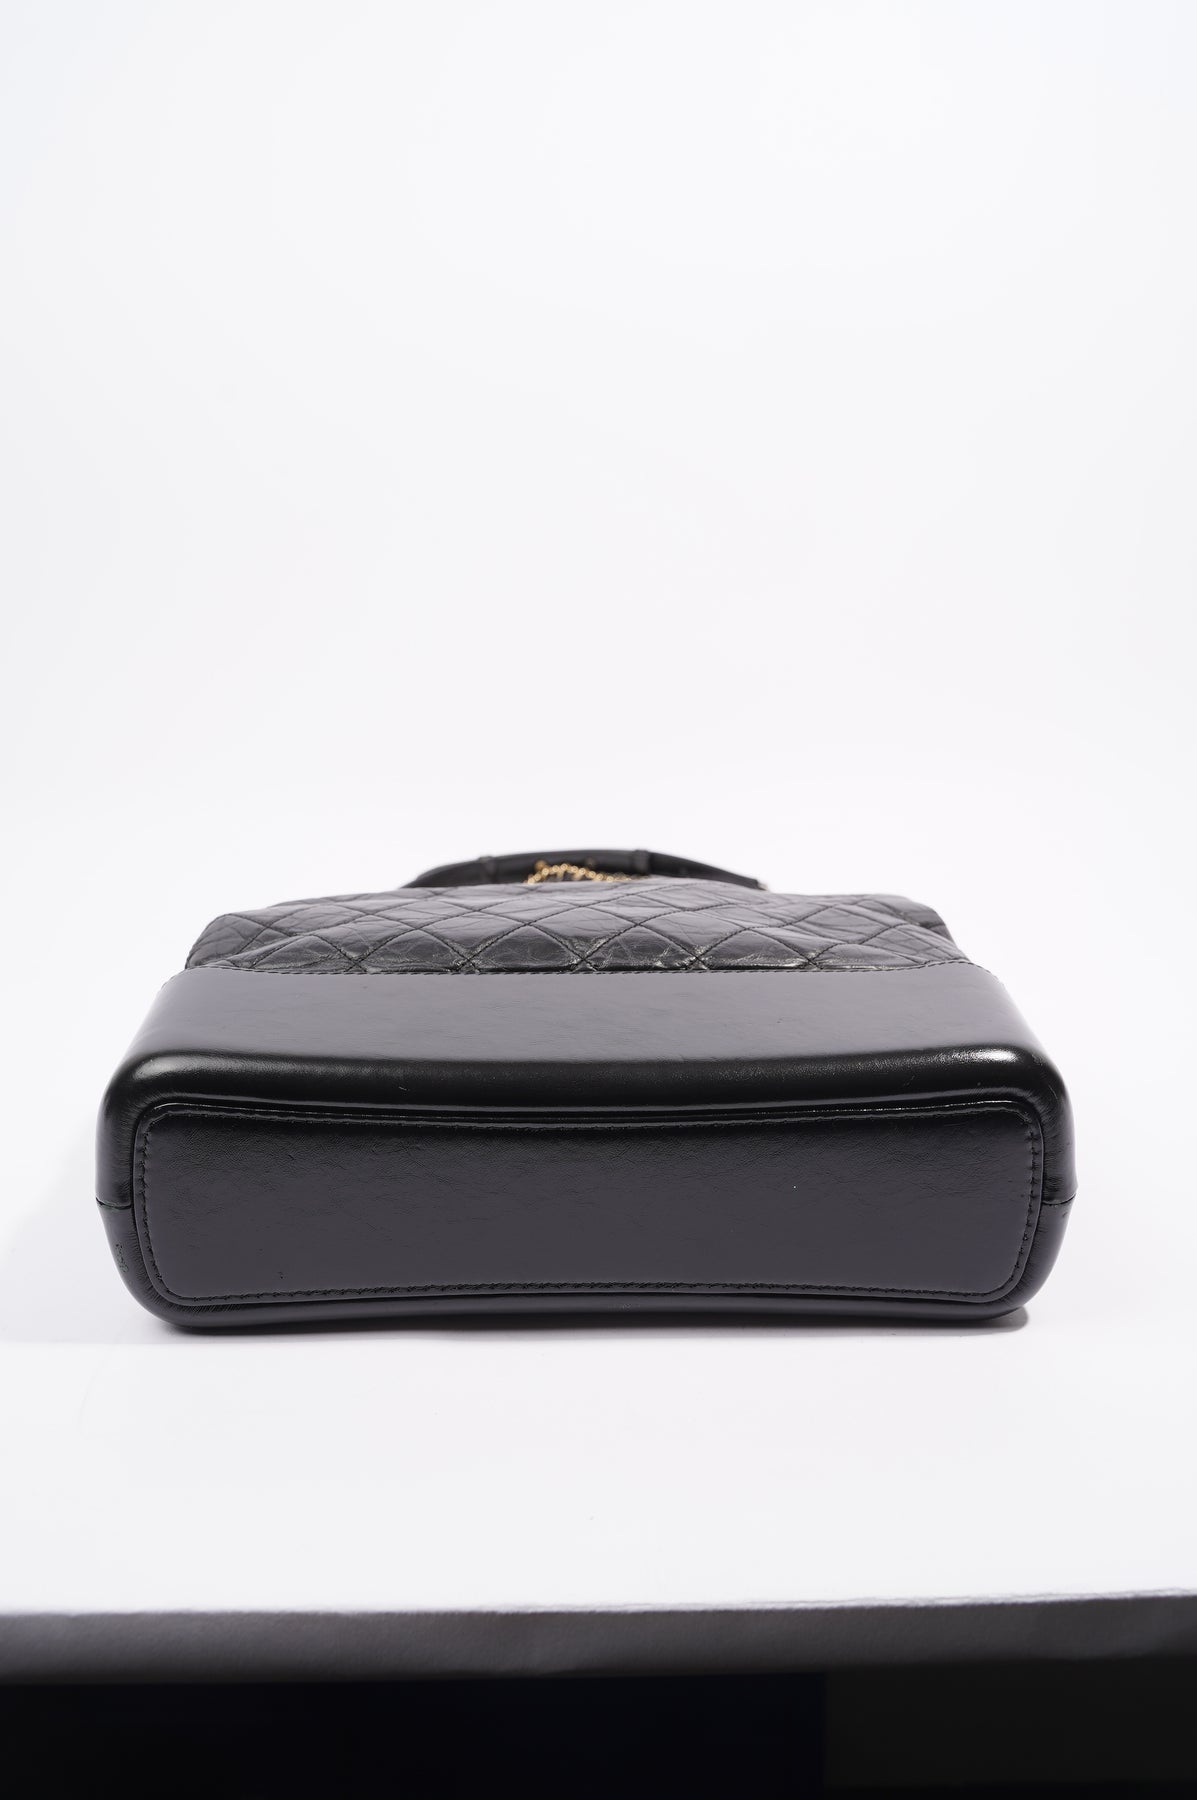 Chanel 2019 Beige & Black Calfskin Gabrielle Large Hobo Bag – My Haute